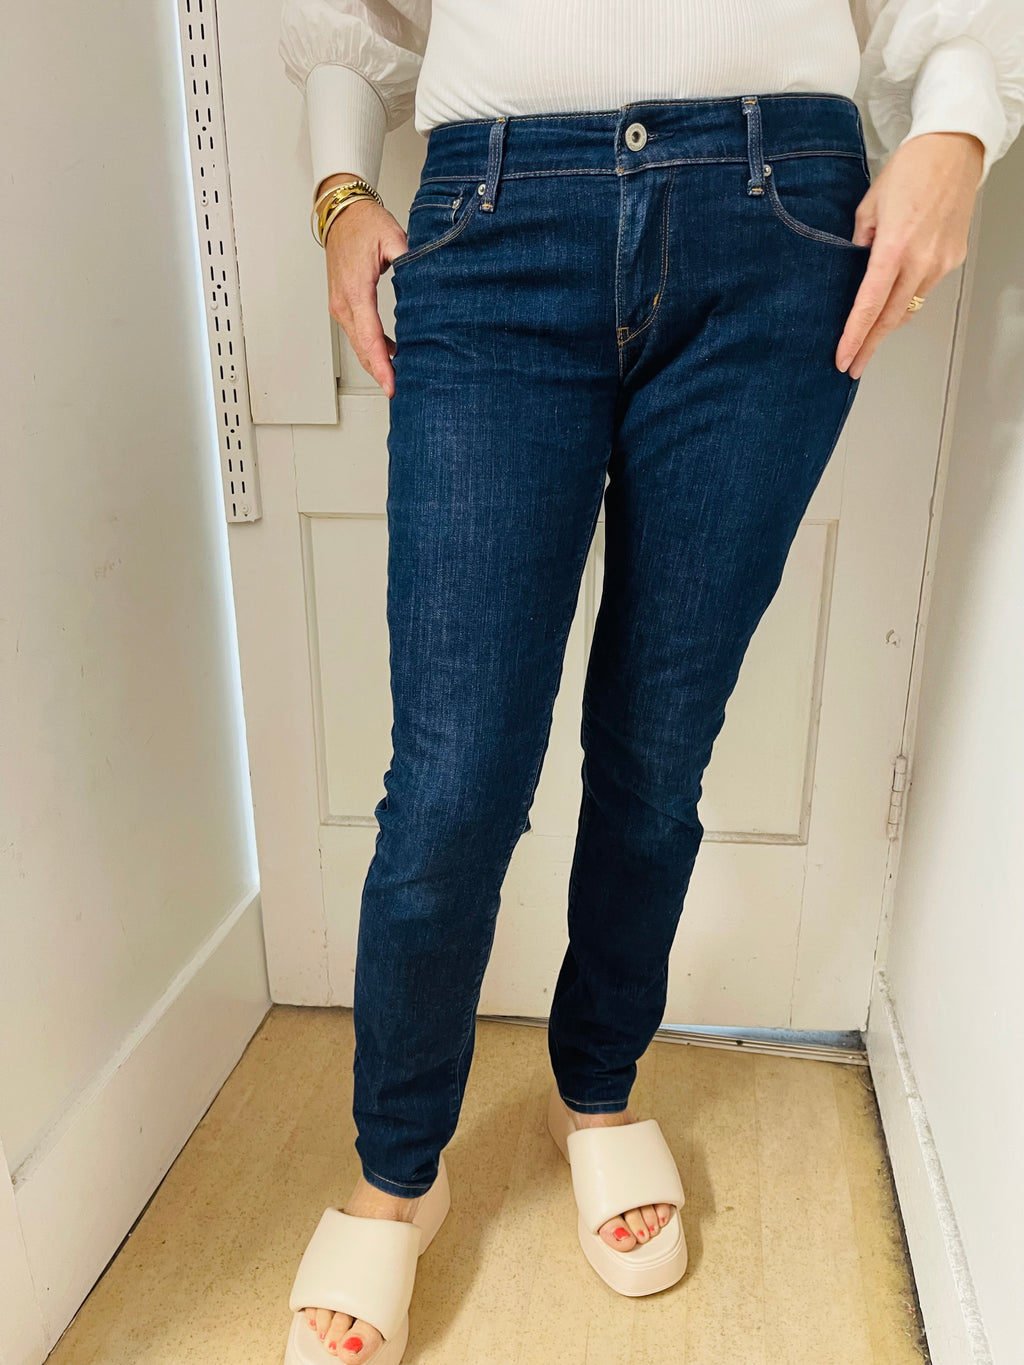 Levis Demi Curve Skinny Jeans Sz 31